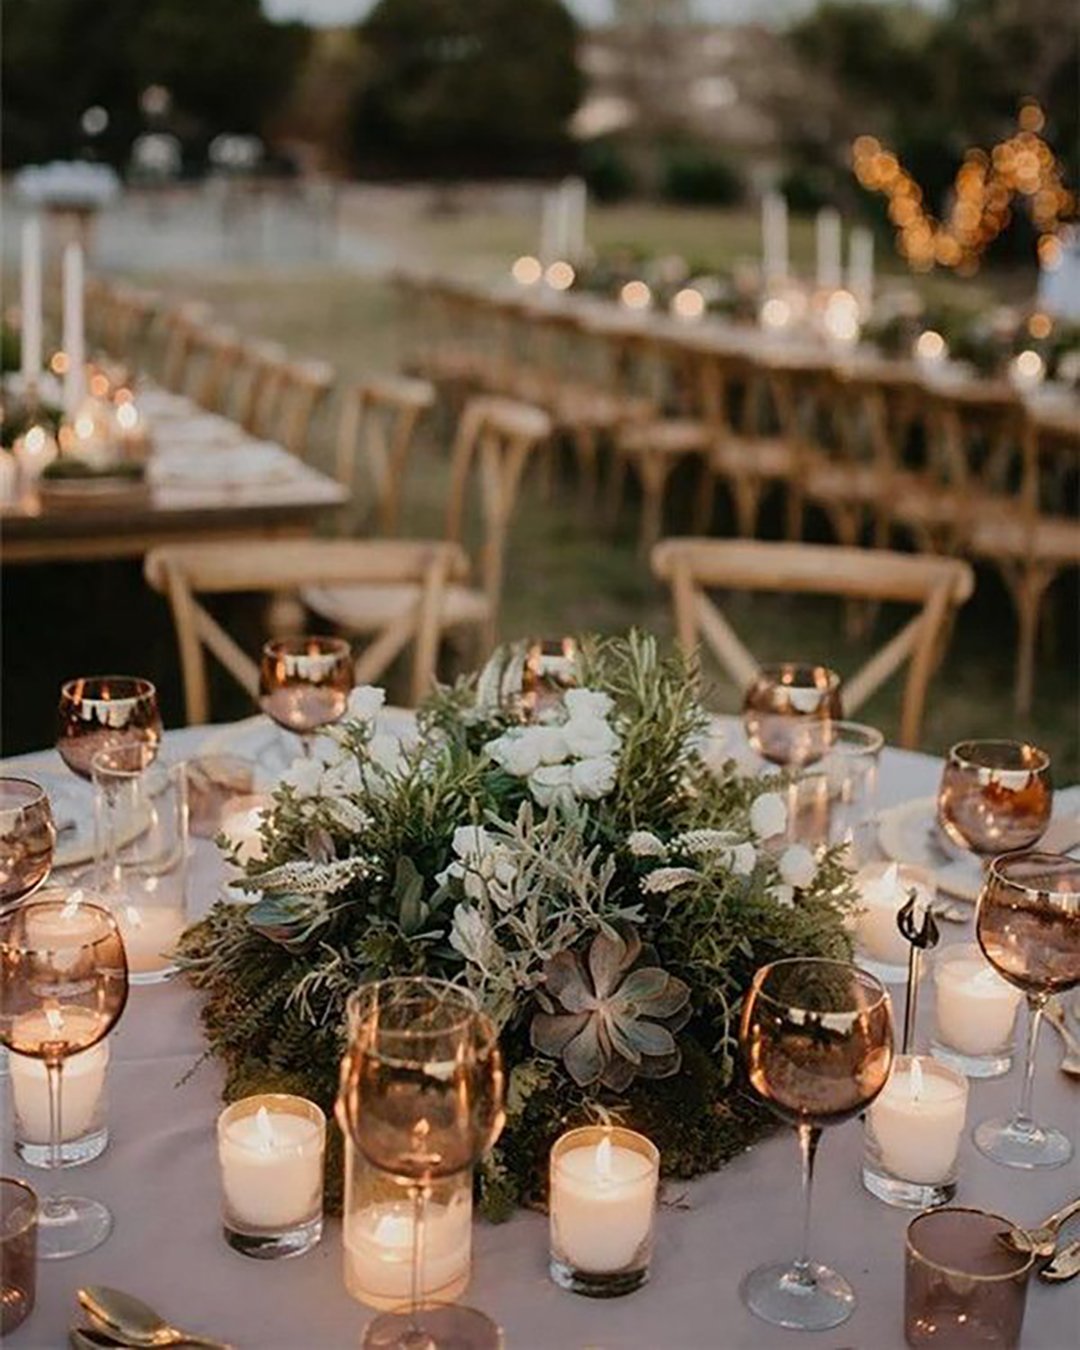 wedding table decorations round with greeneryand cadles paulinaweddings